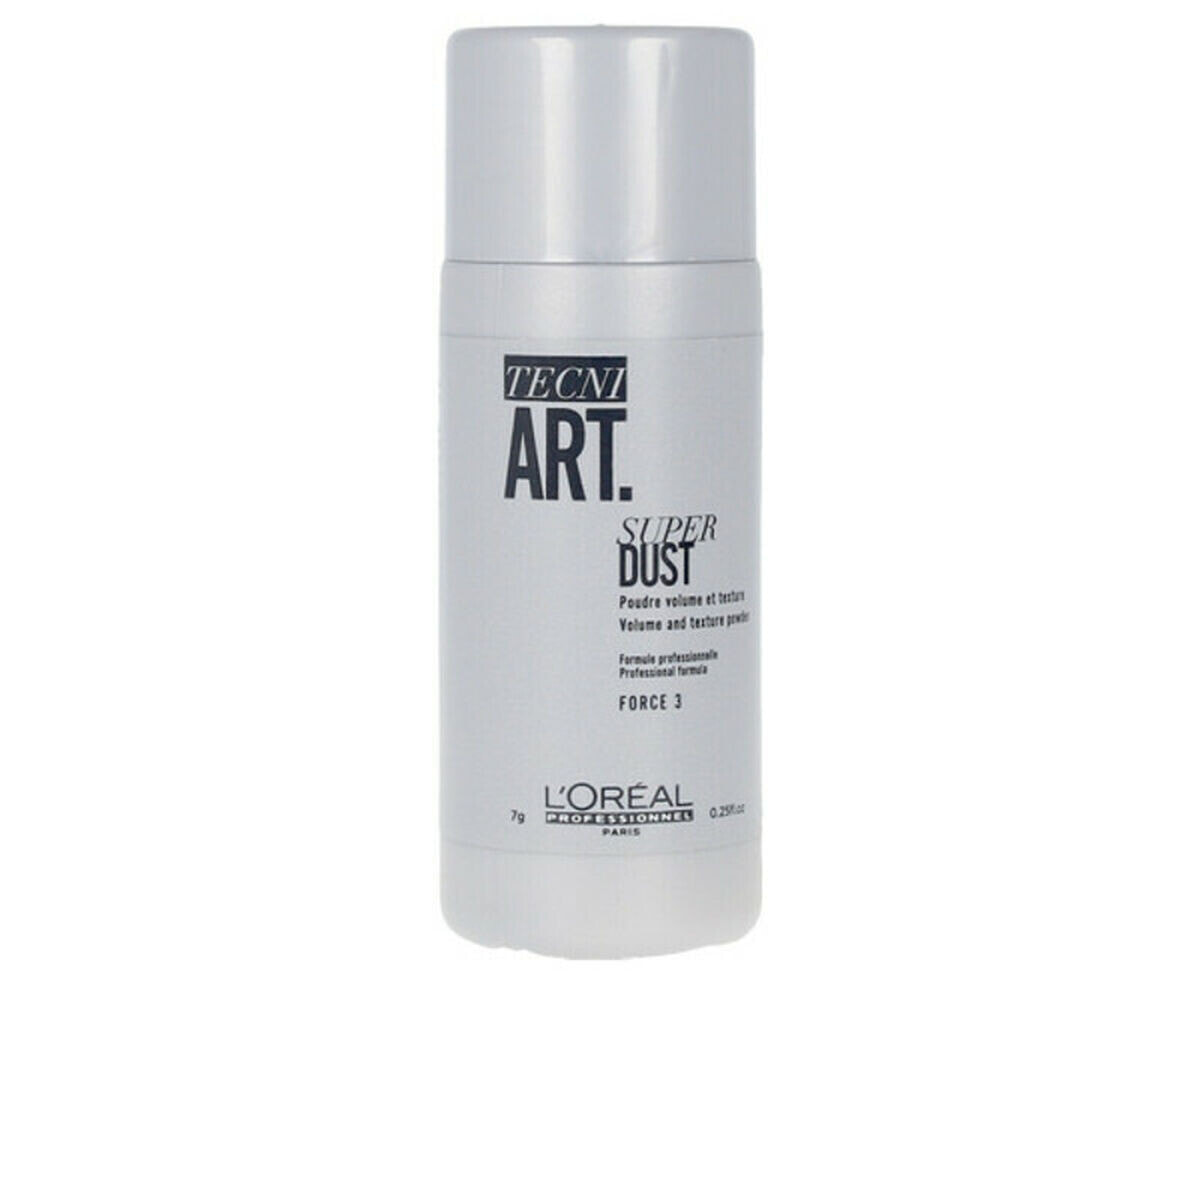 Фиксирующий лак Tecni Art Super Dust L'Oréal Paris Объем (7 g)